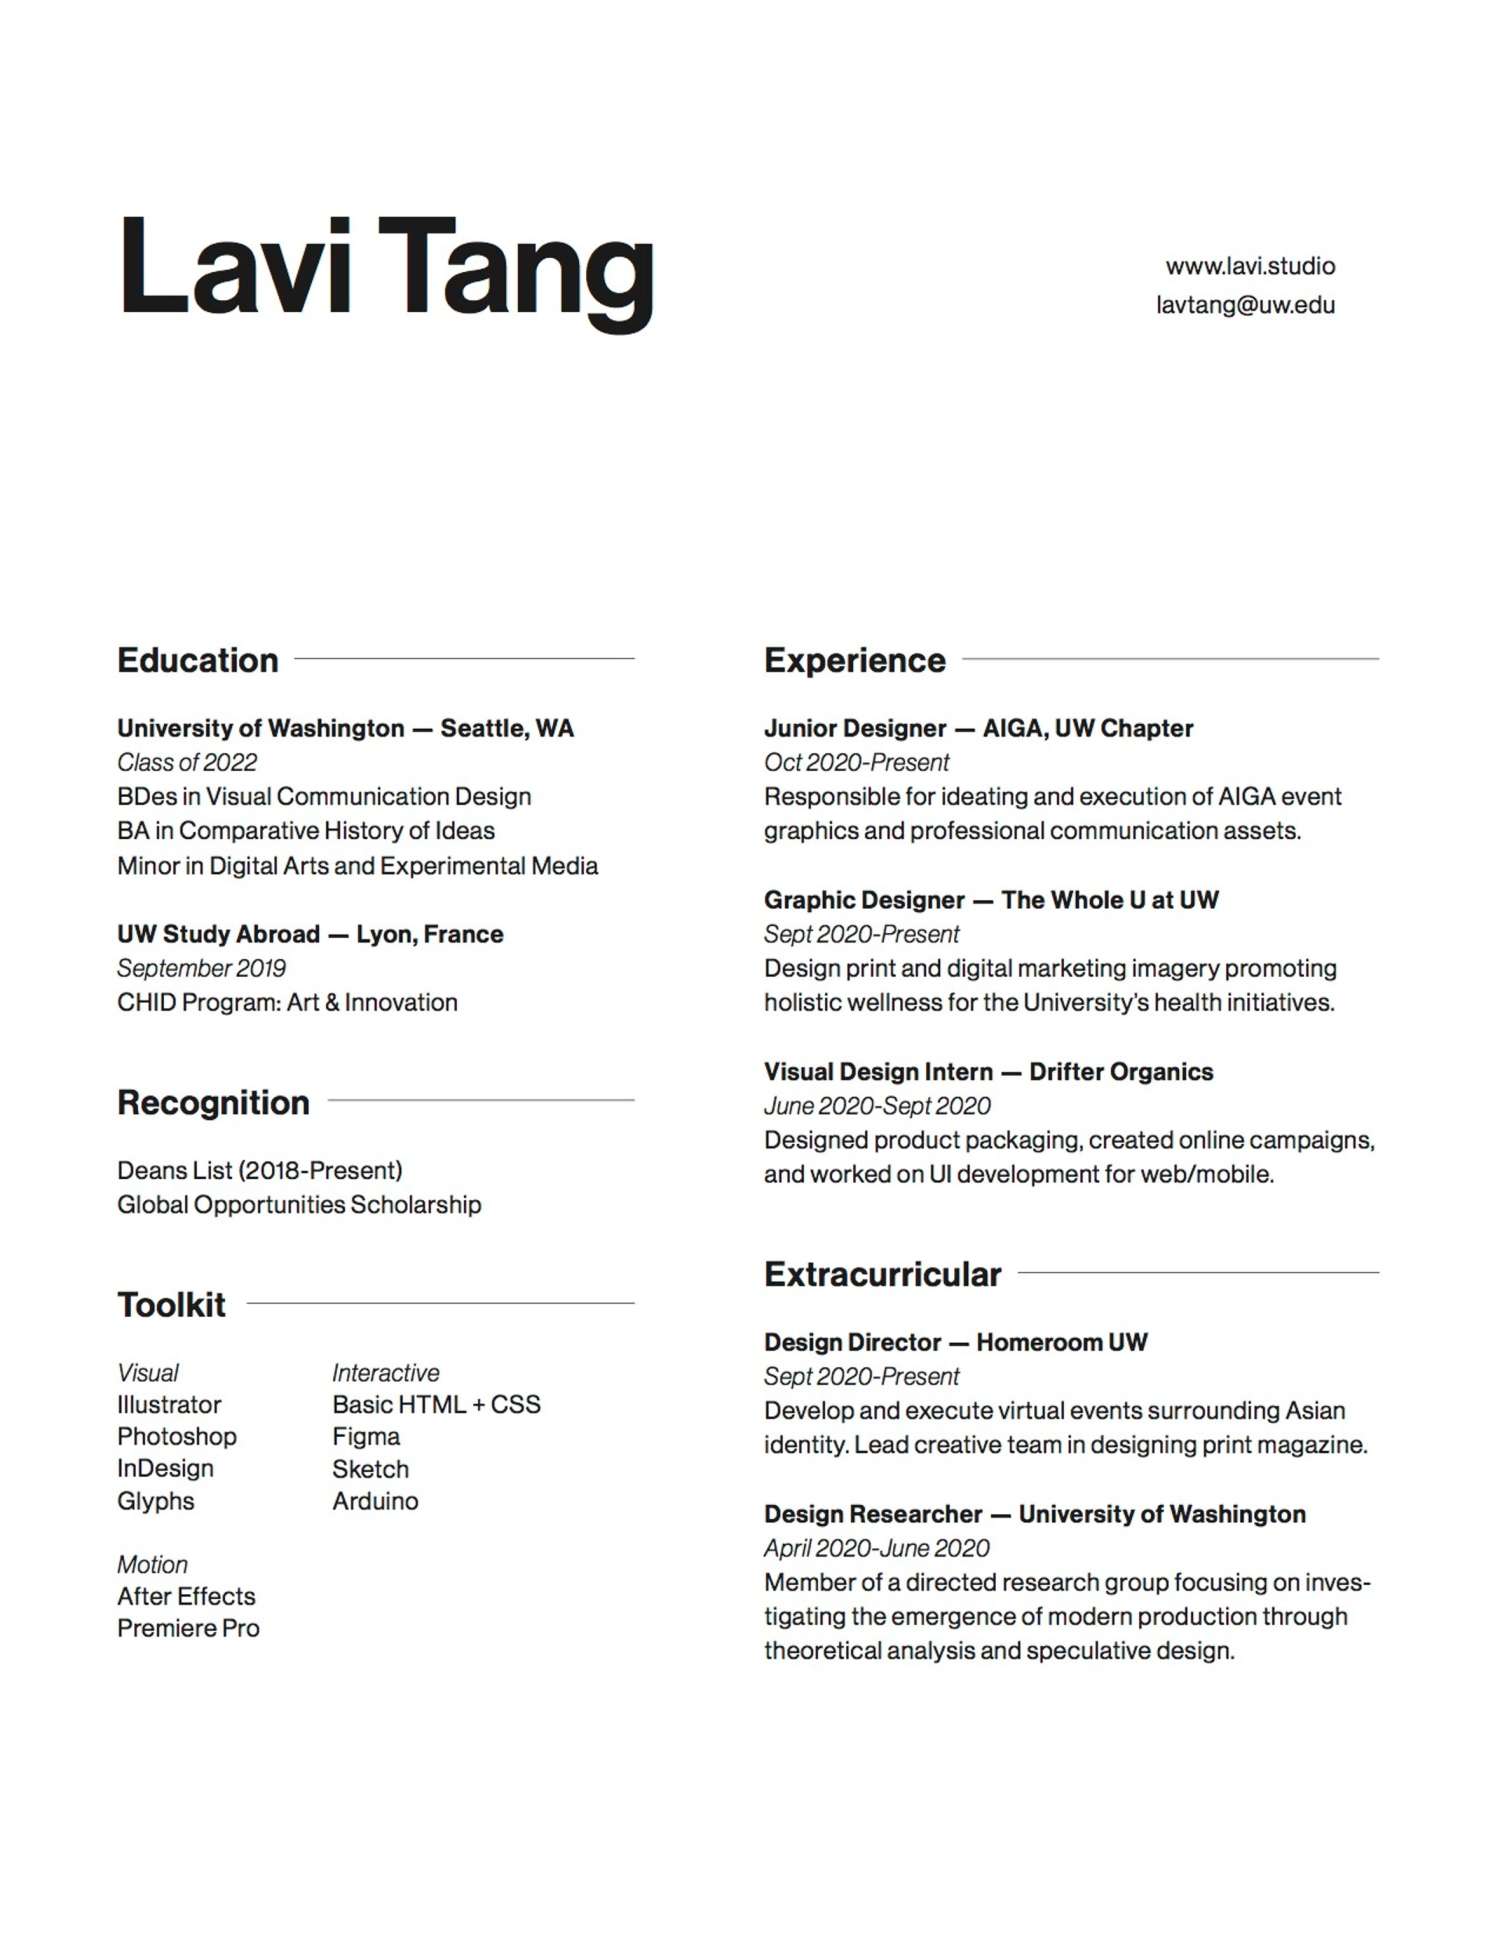 Lavi Tang's resume